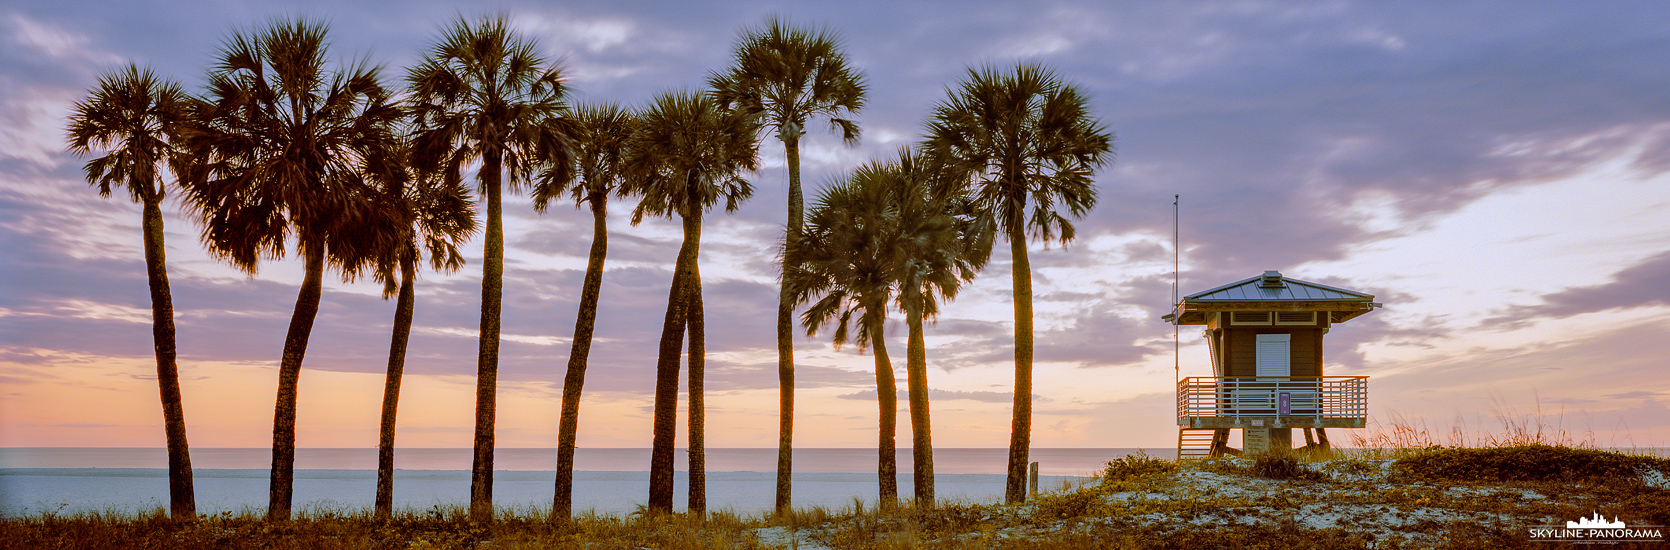 Panorama Florida - Palmen am Strand (p_01240)